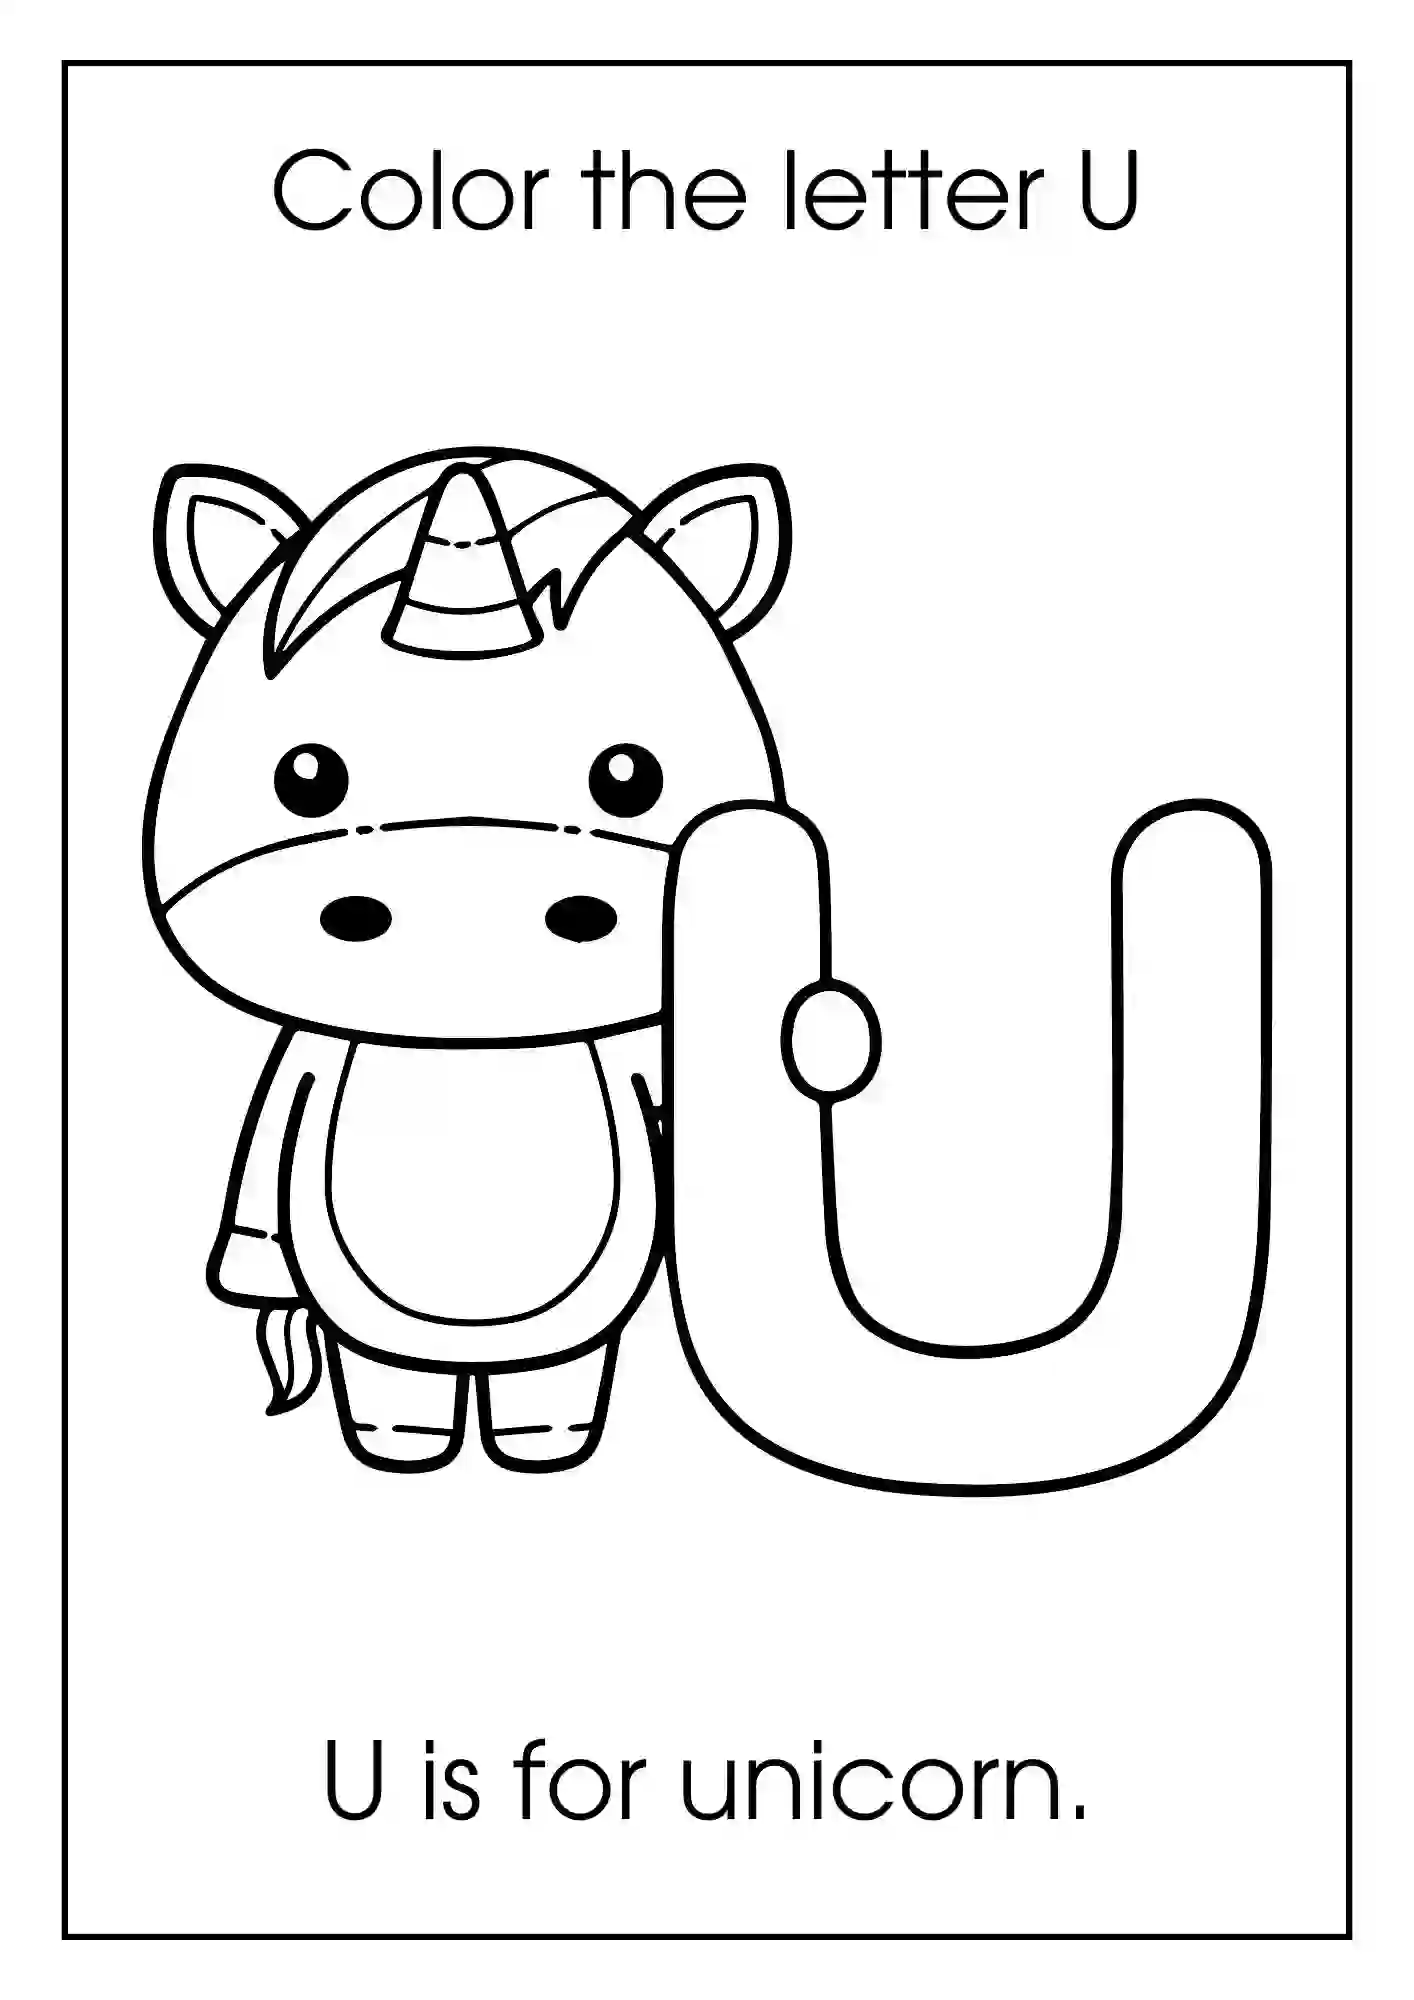 Animal Alphabet Coloring Worksheets For Kindergarten (Letter u with unicorn)